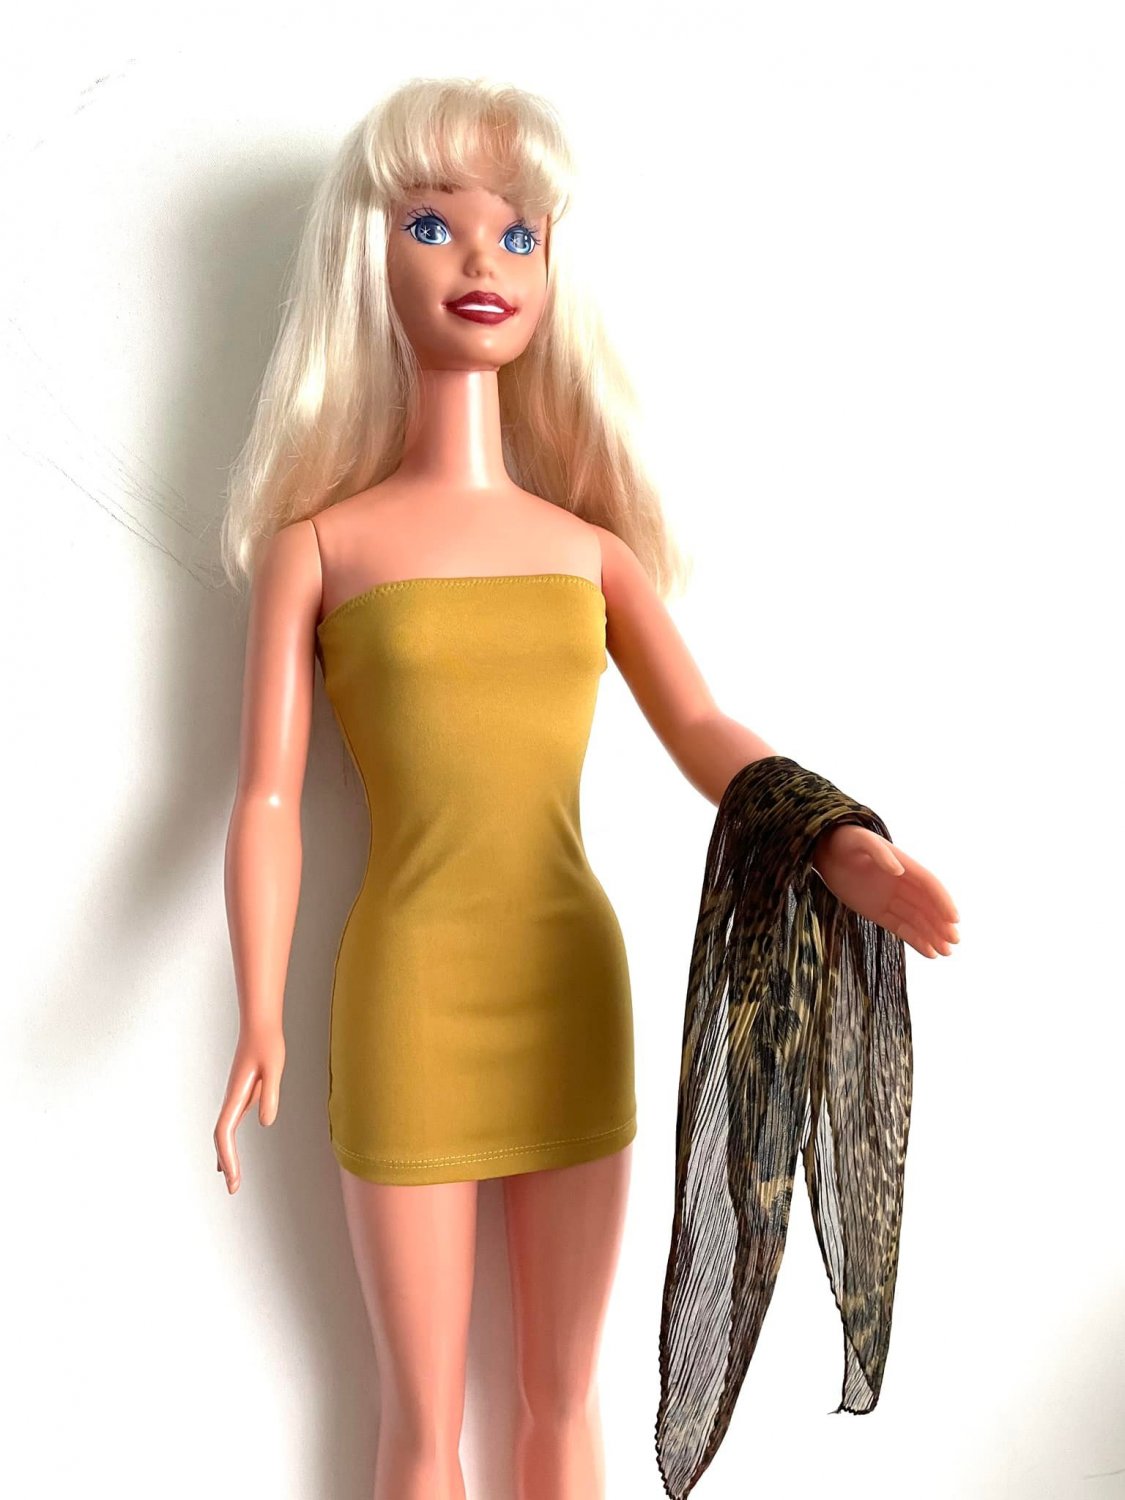 Mustard Yellow Mini Dress for My Size Barbie Doll 36" New. + Animal Print Scarf